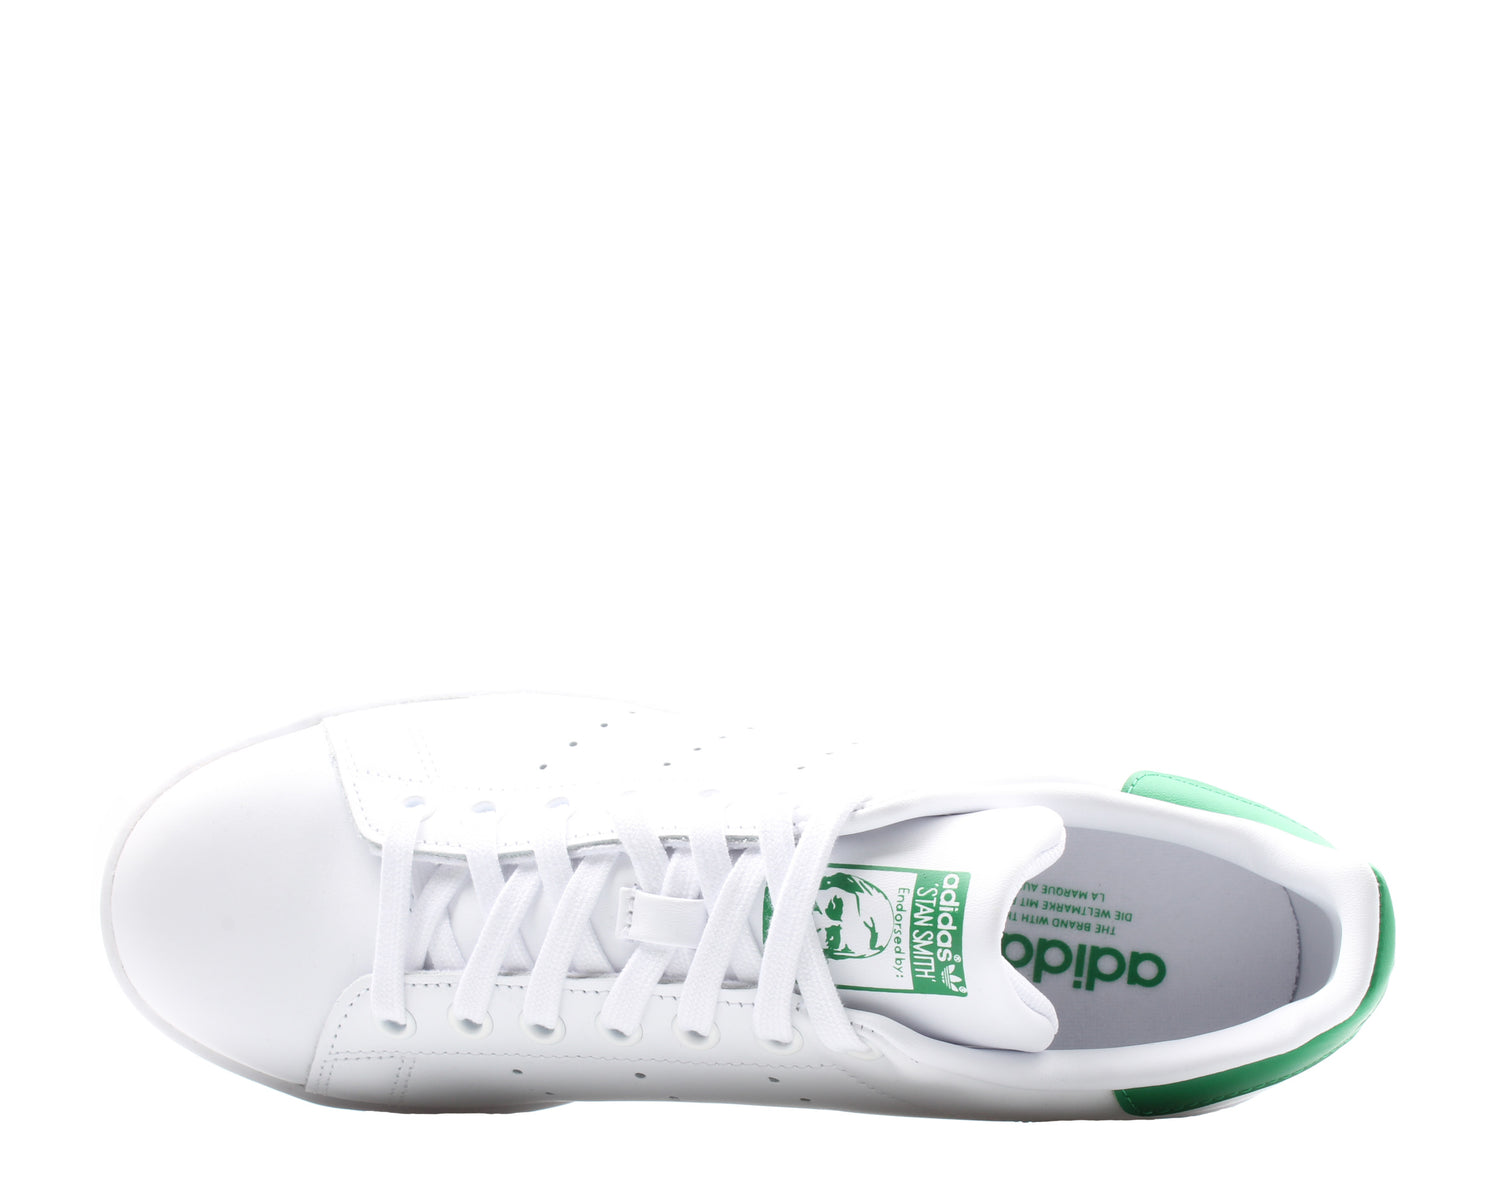 Adidas Originals Stan Smith Men's Tennis Shoes